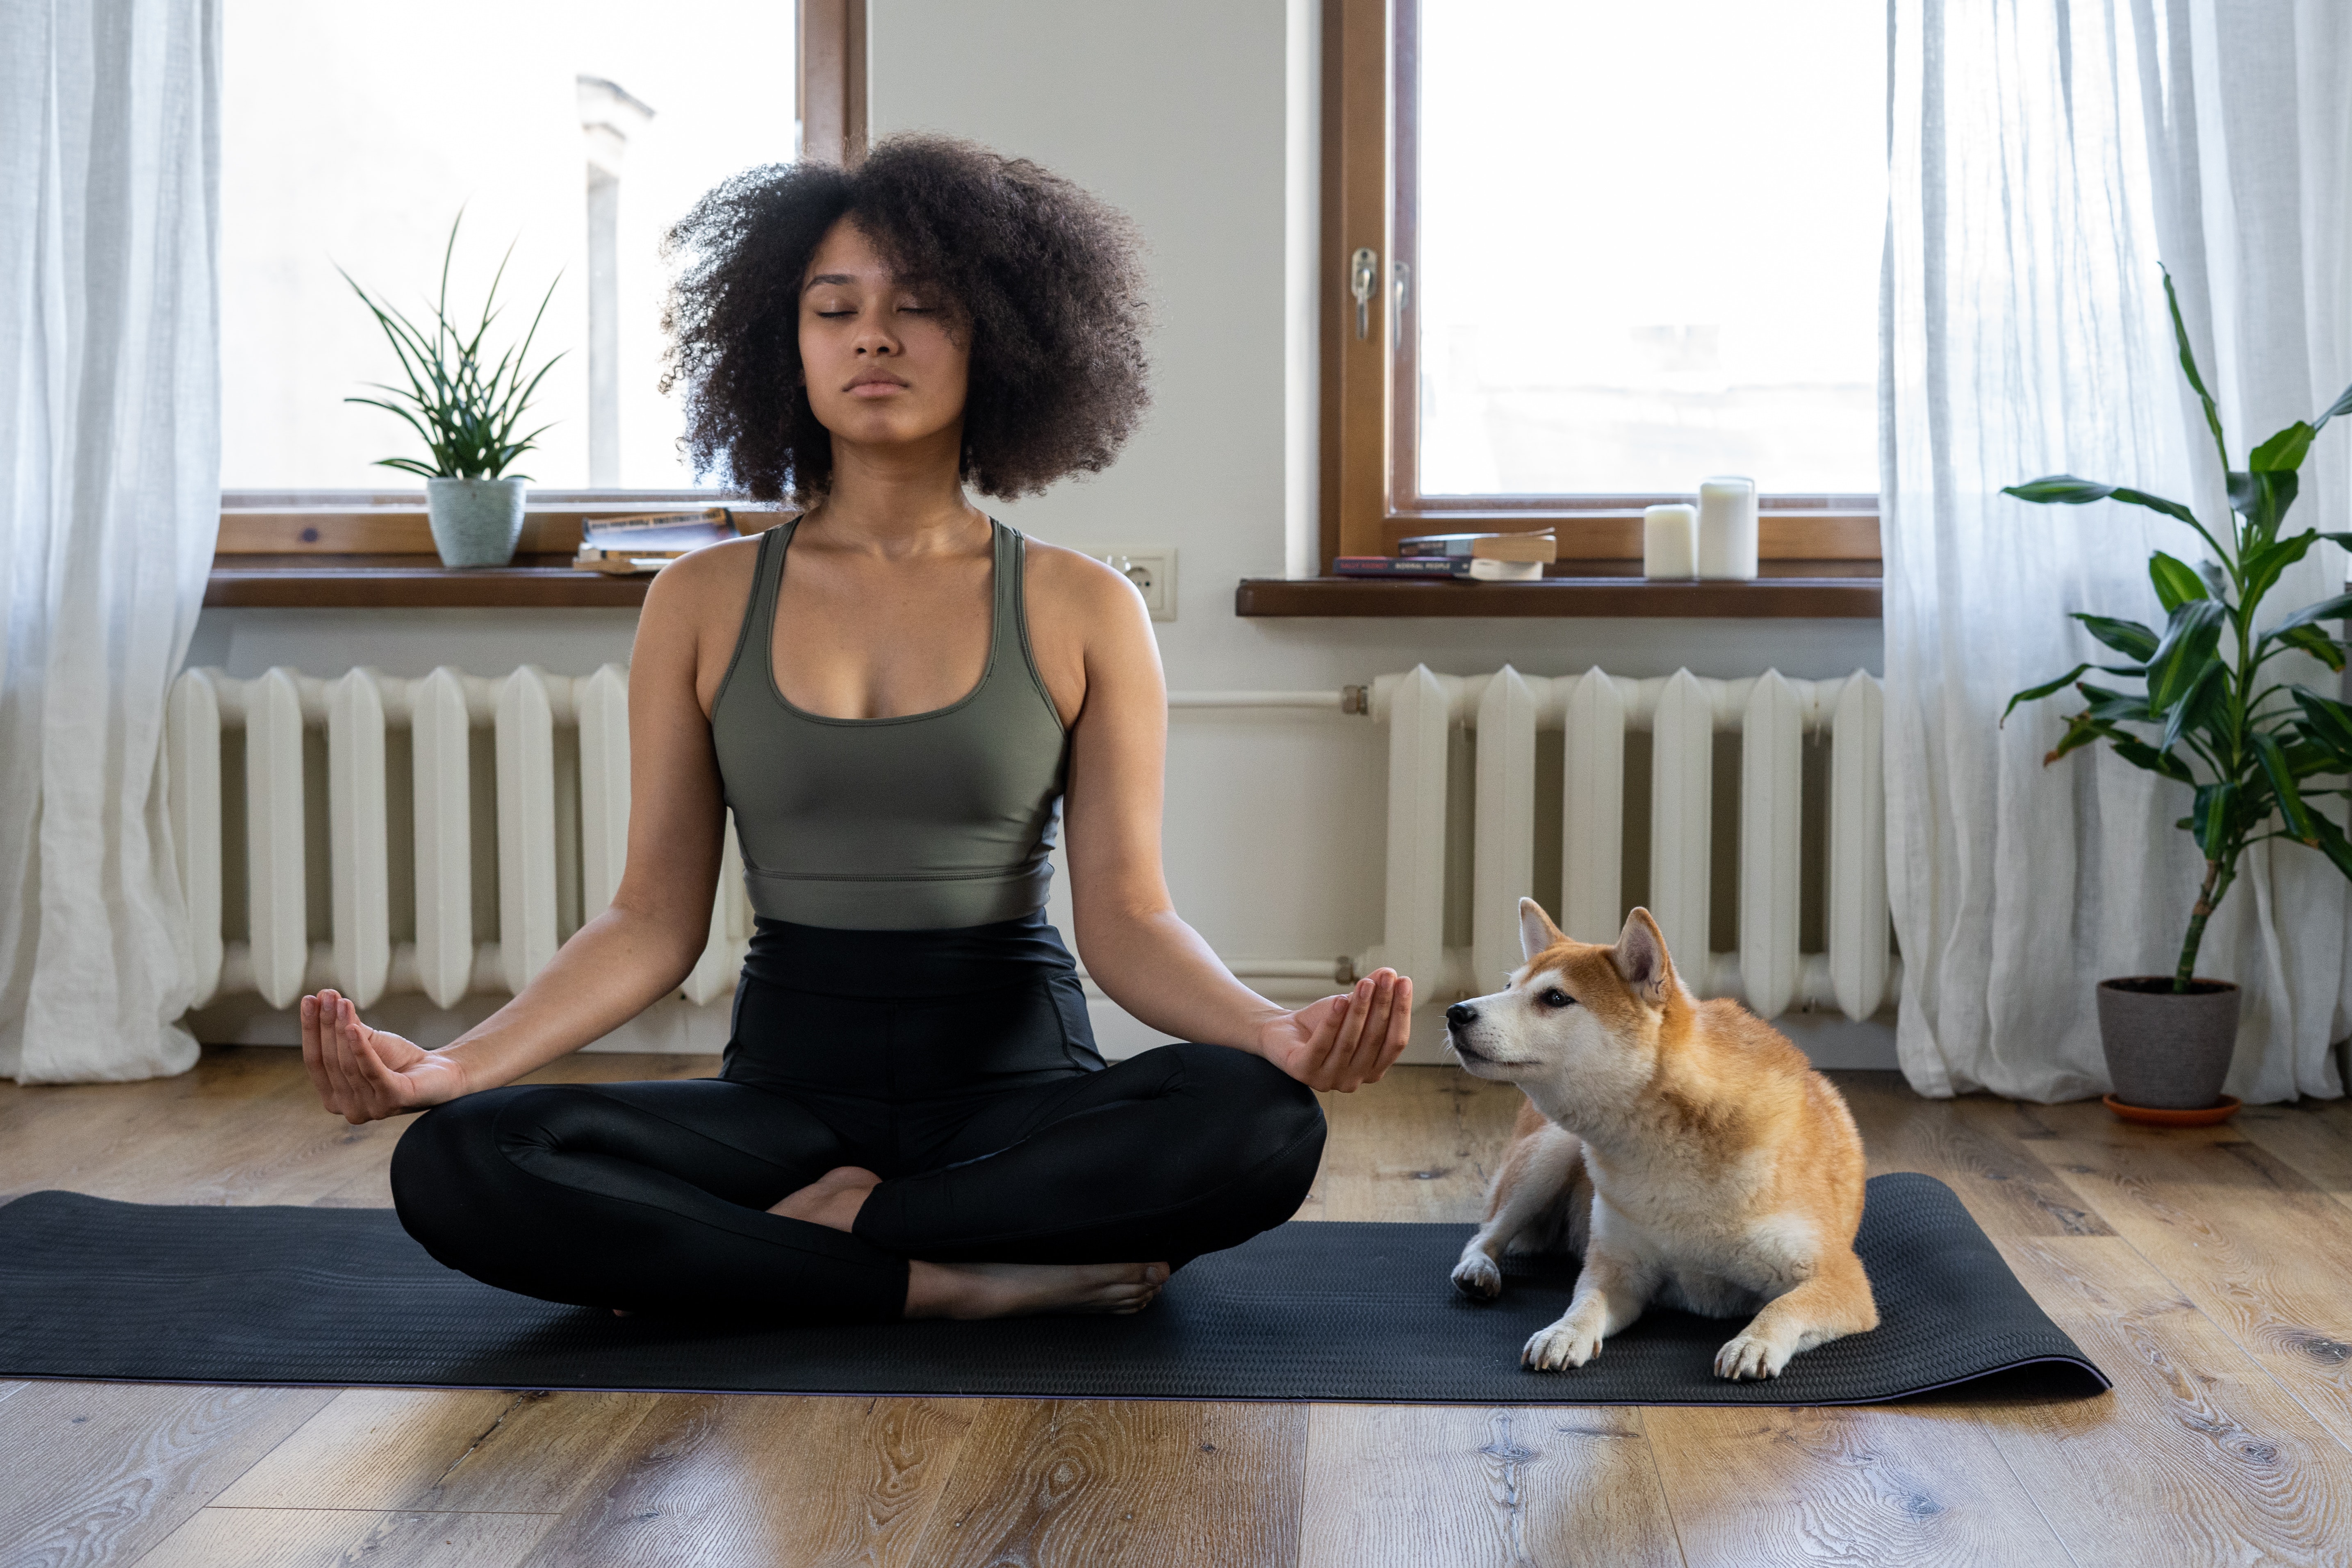 Girl doing Yoga on a mat beside a dog